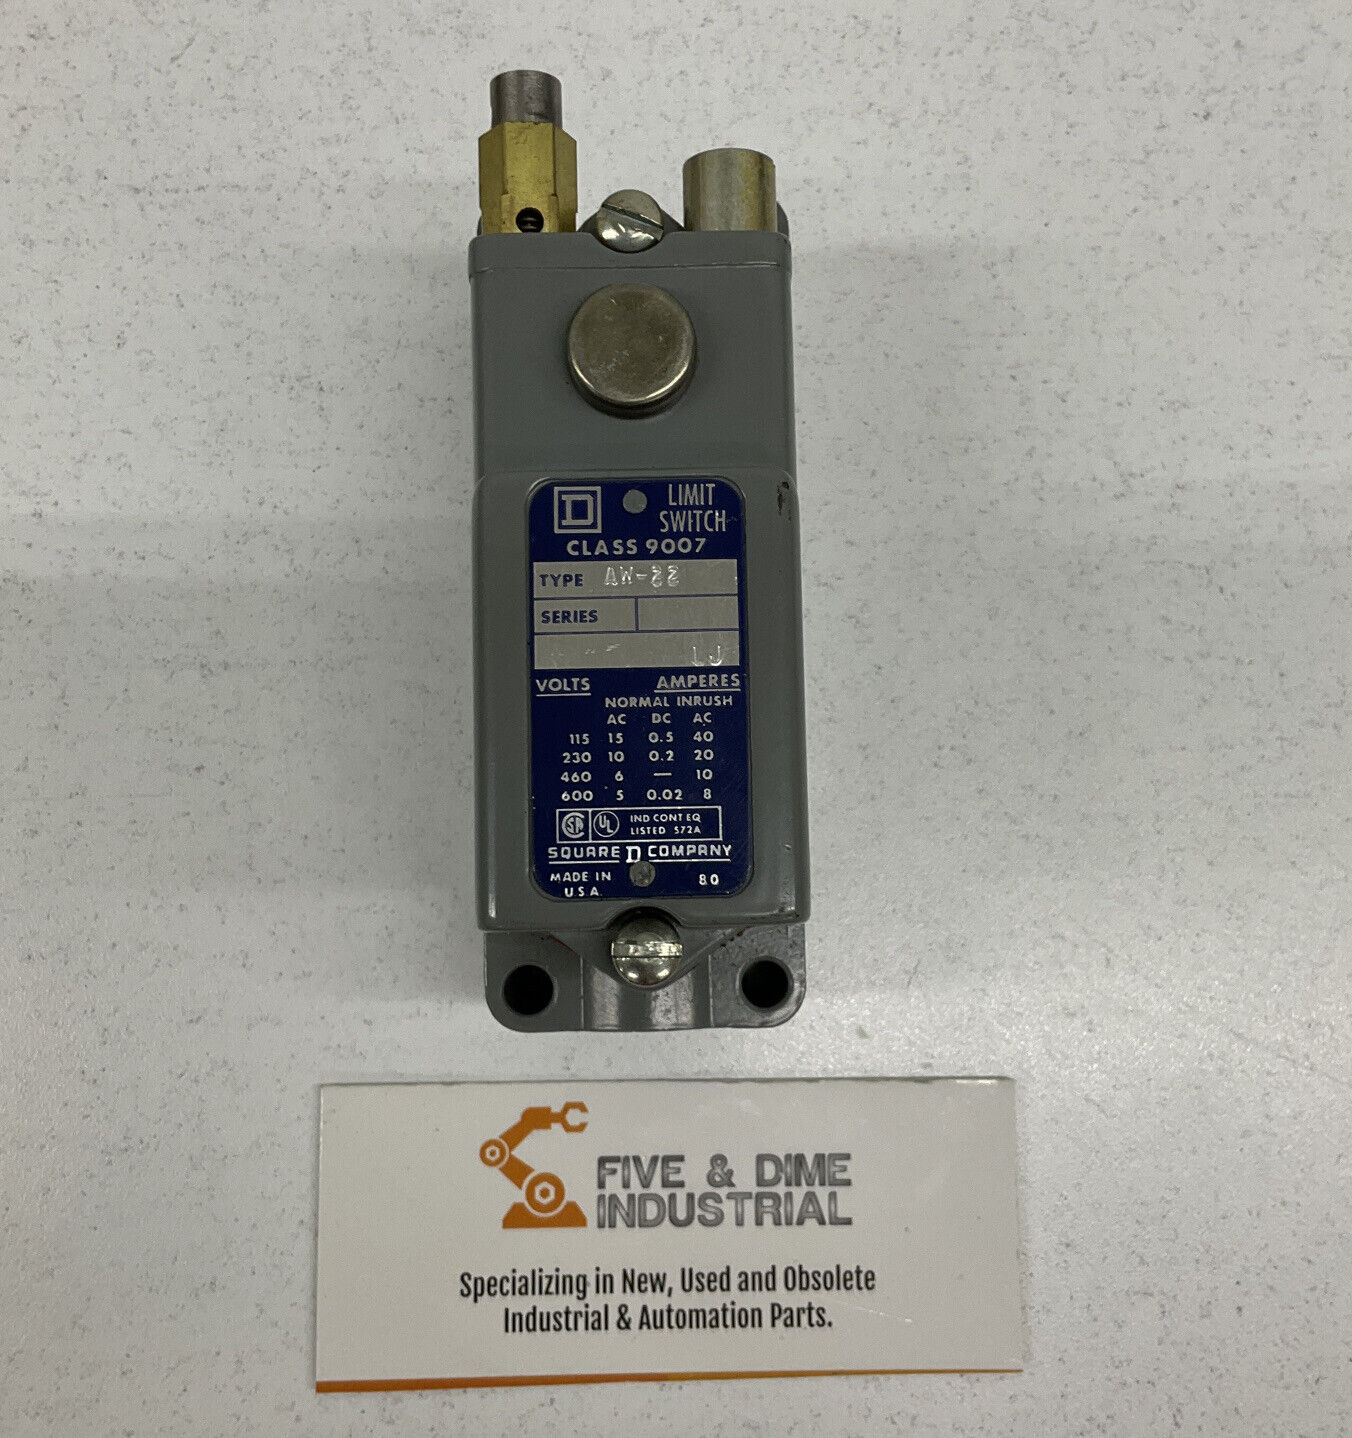 Square D 9007 AW-22 Precision Limit Switch 1 NO, 1 NC 600V  (BL204)